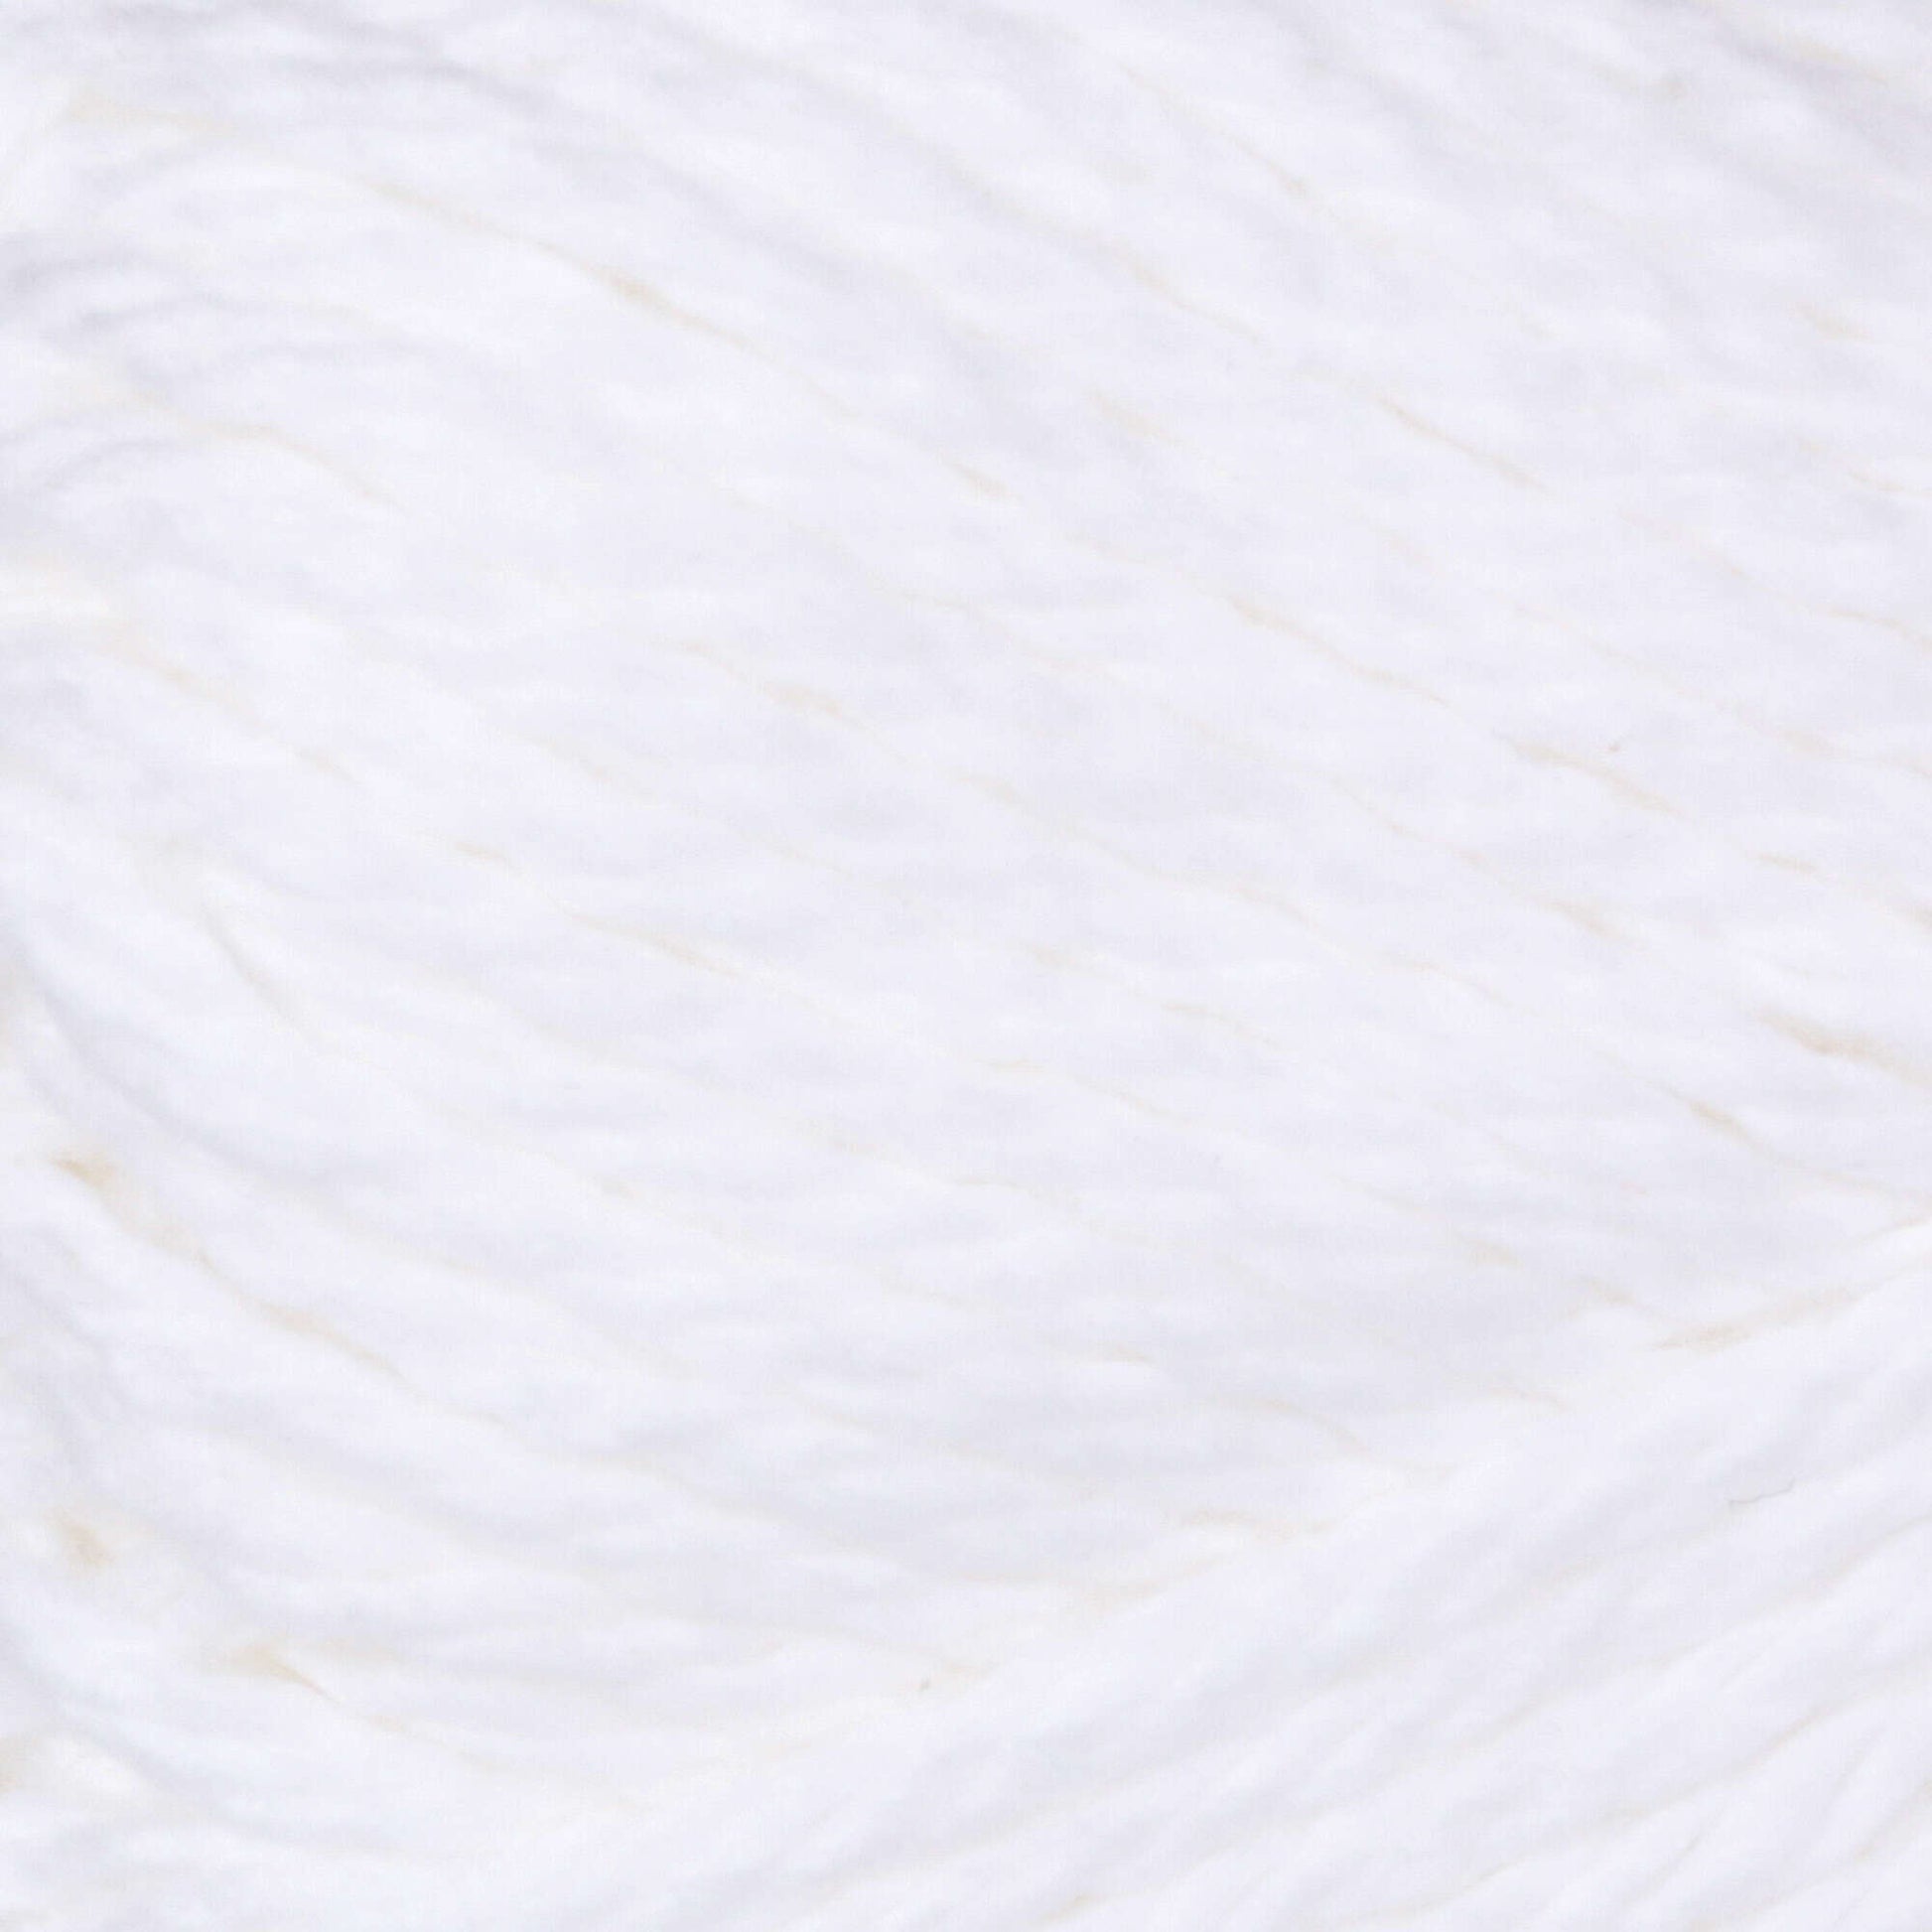 Bernat Handicrafter Cotton reviews in Misc - ChickAdvisor